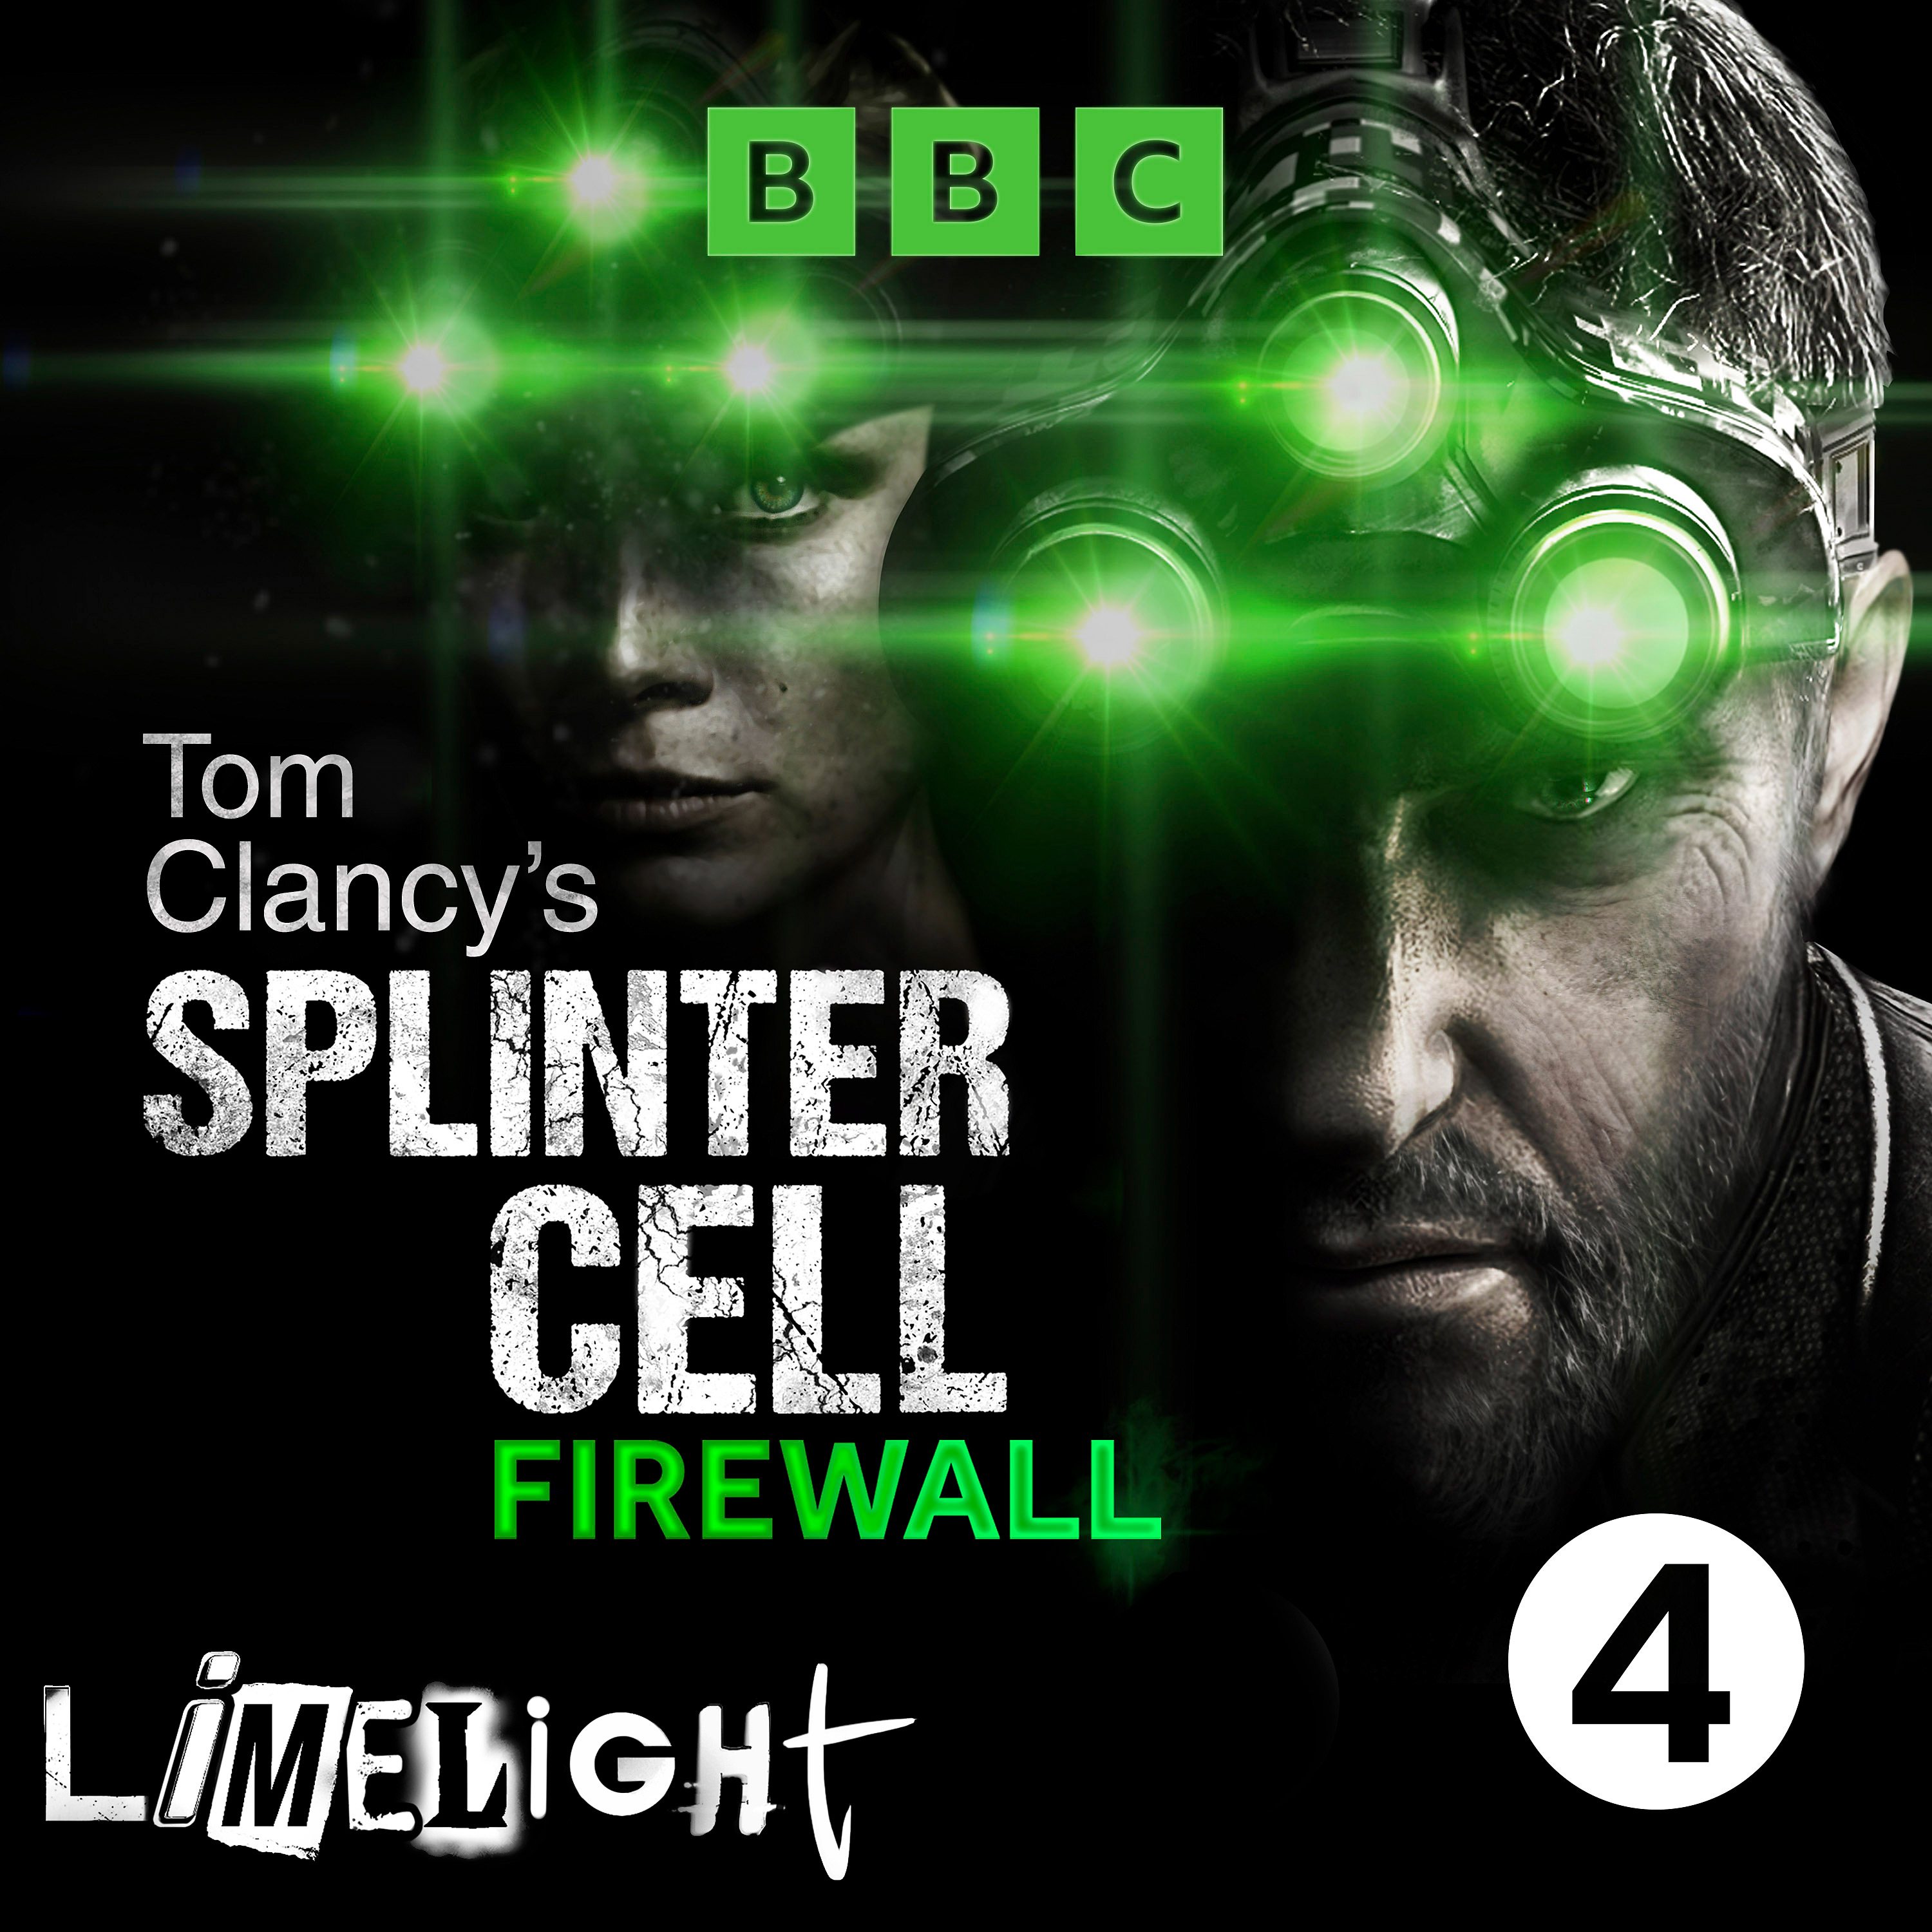 Tom Clancy’s Splinter Cell: Firewall, Episode 7